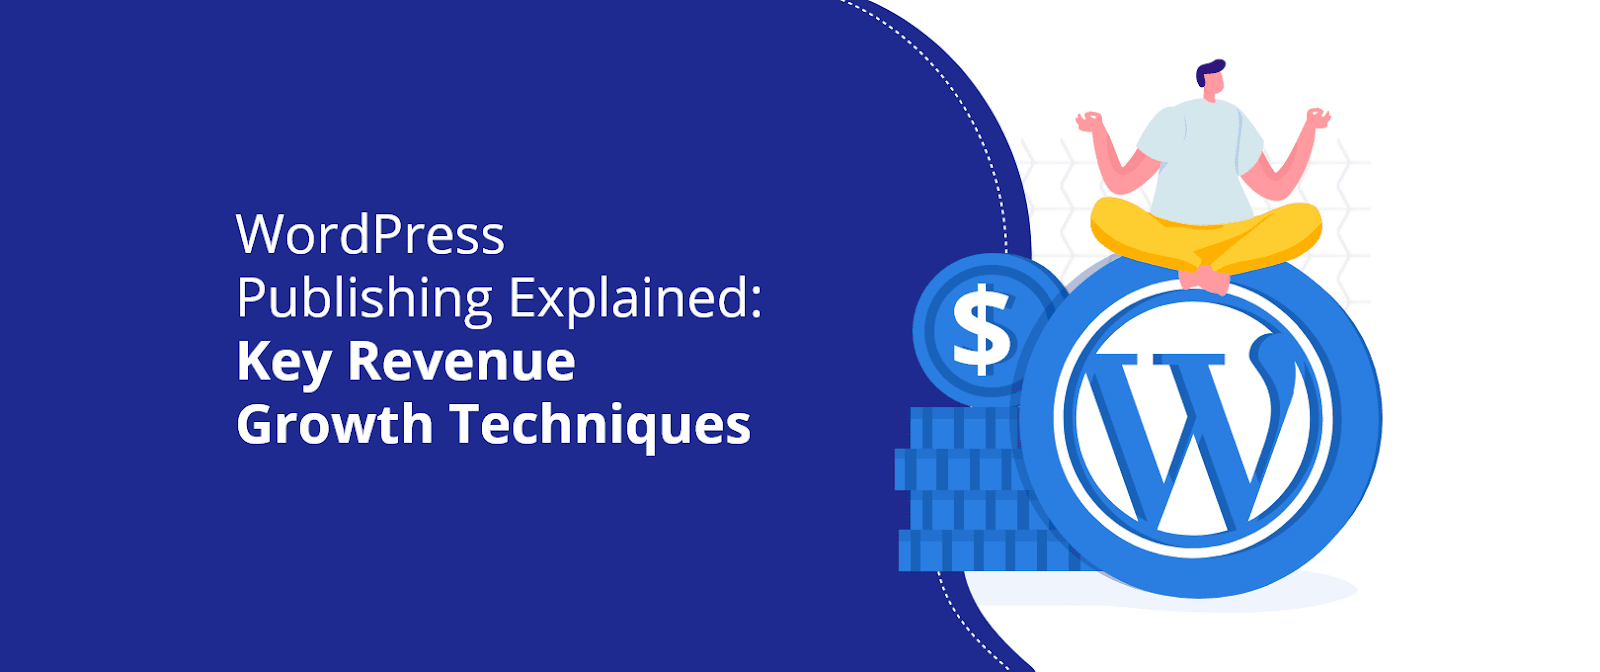 WordPress Publishing Explained: Key Revenue Growth Techniques